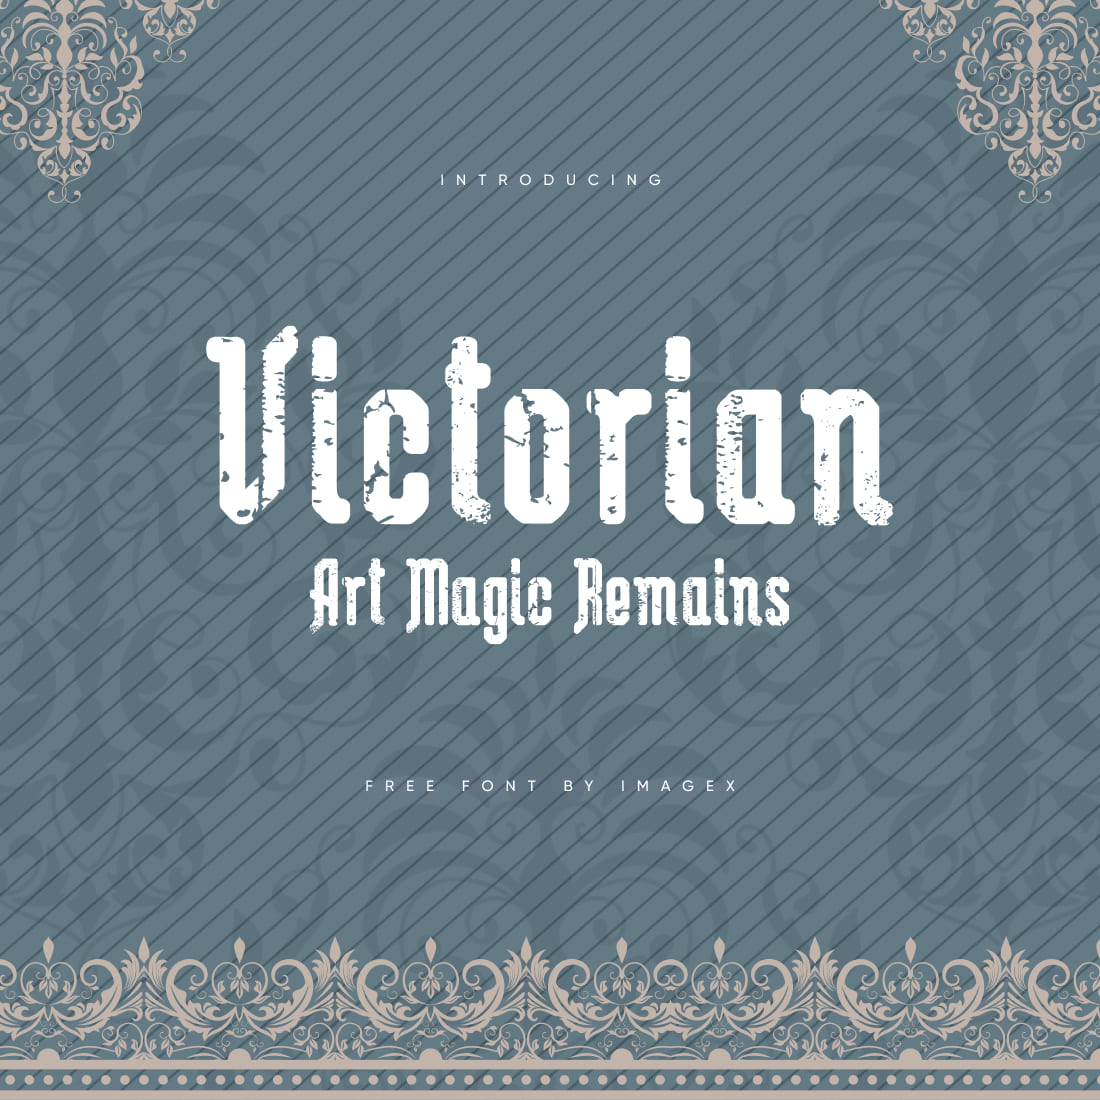 Victorian Art Magic Remains Free Font Main Preview by MasterBundles.